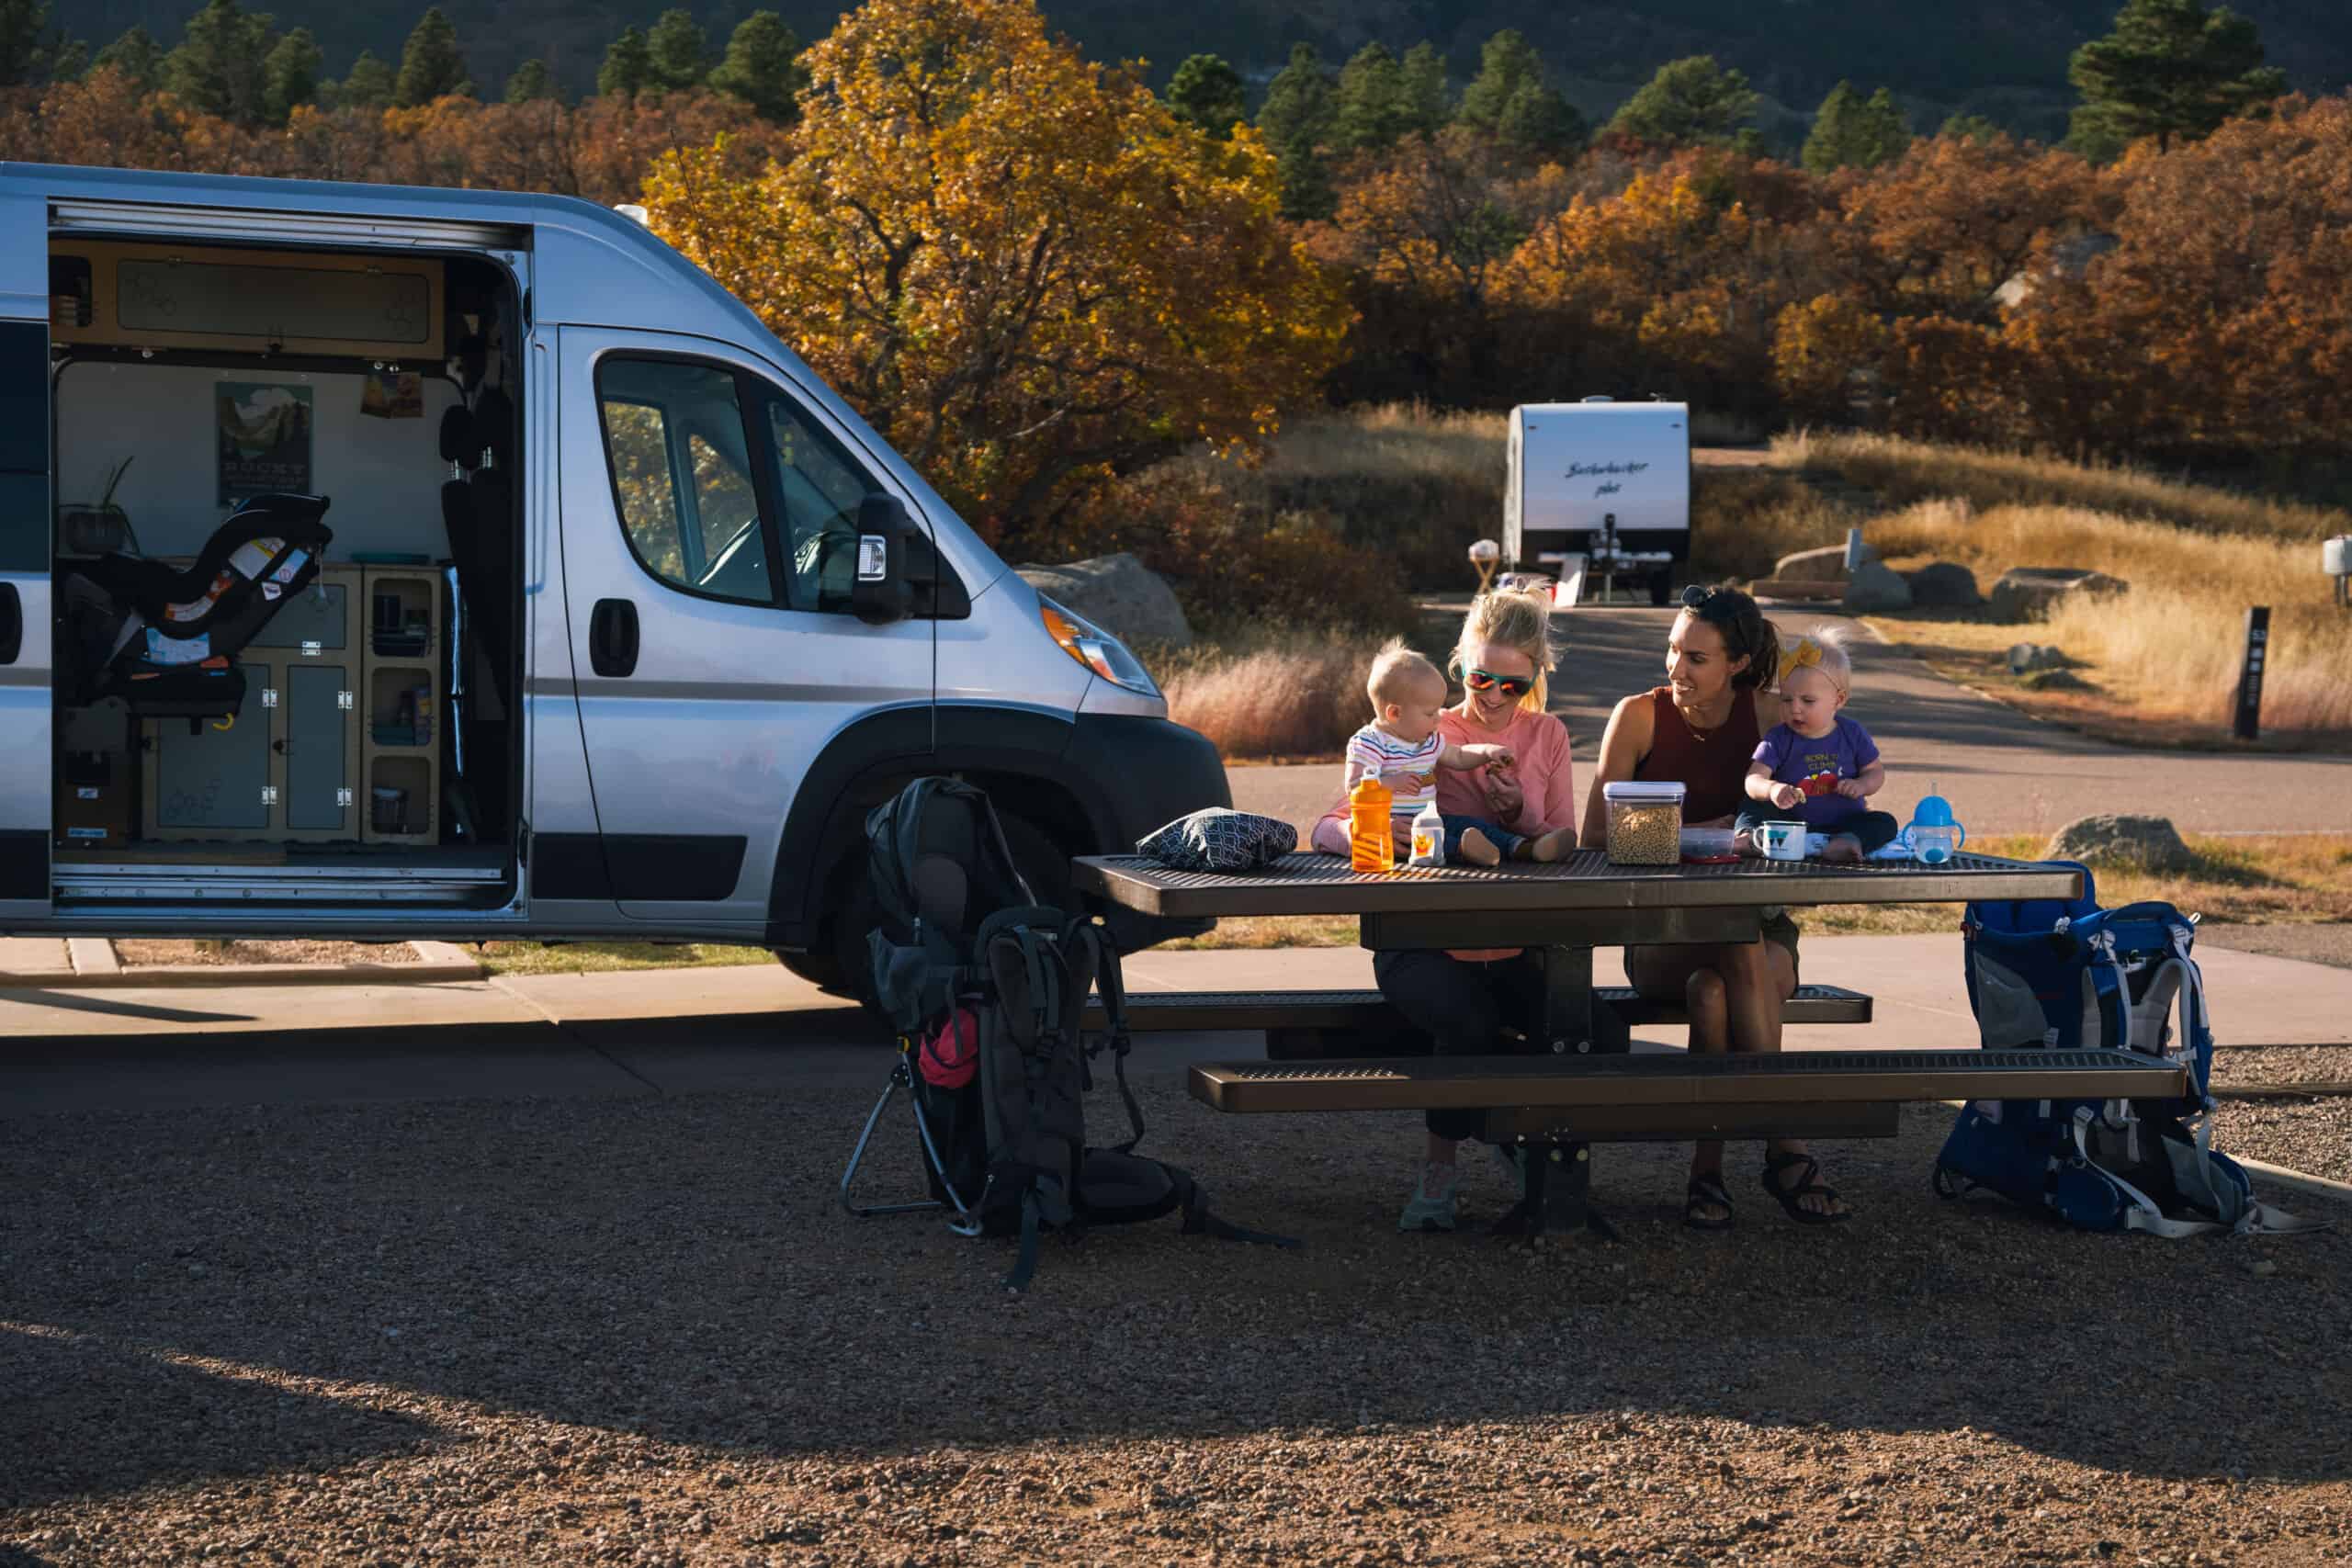 picnic outside of a camper van conversion